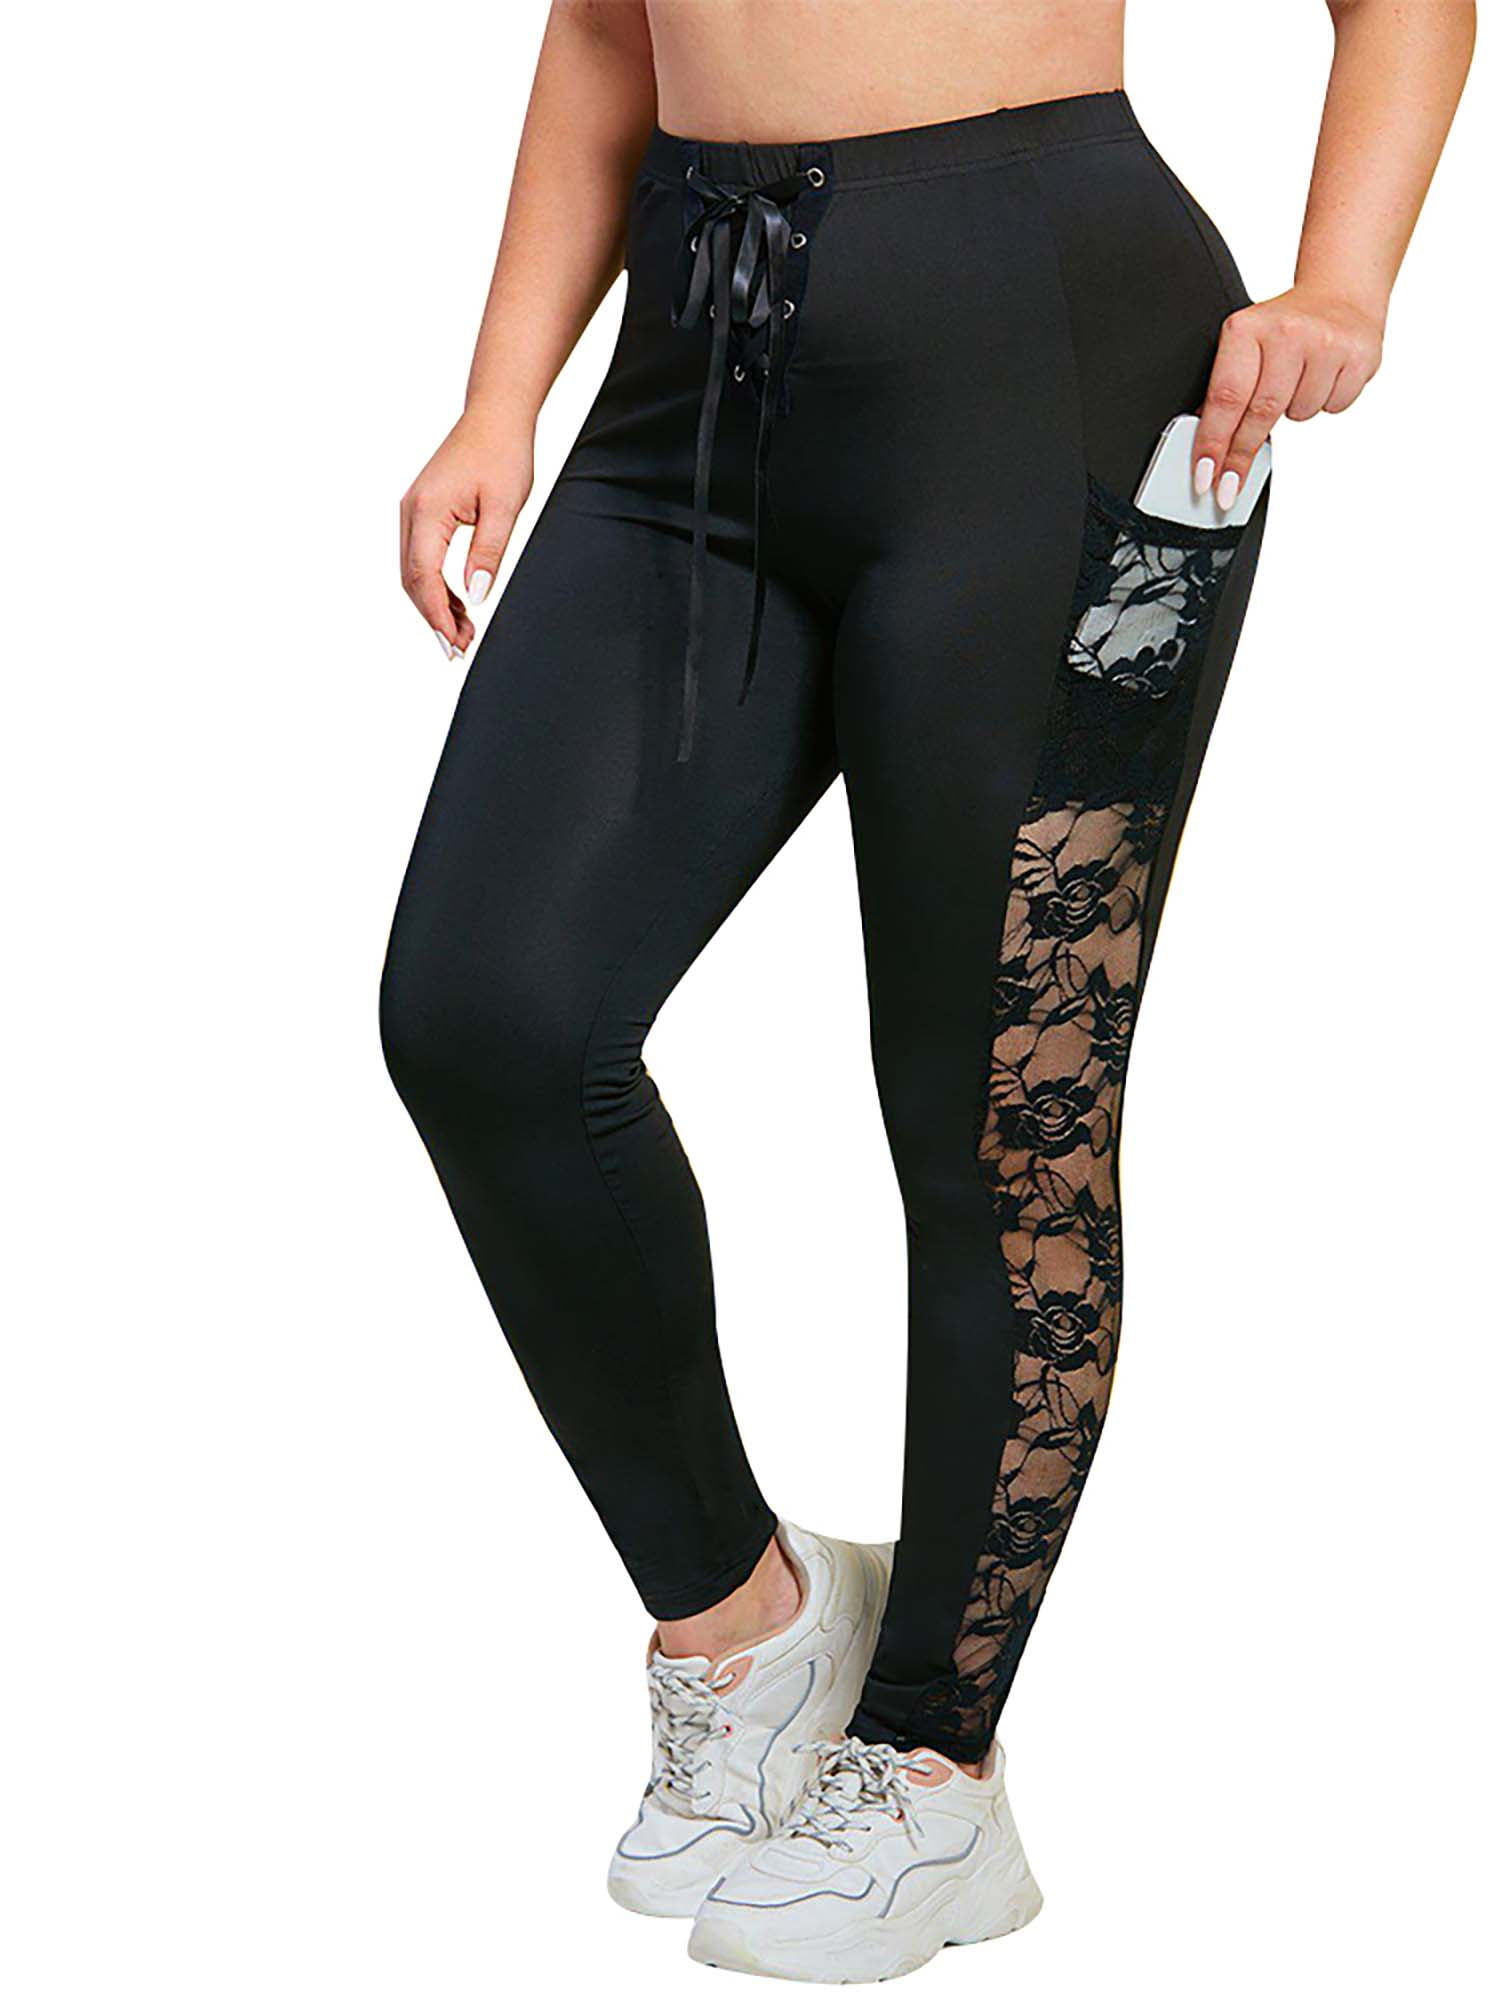 Lace Trim Leggings for Women Plus Size Stretchy Casual Pants Slim-Fit Buttocks Capri Leggings Sport Yoga Trousers M-5XL